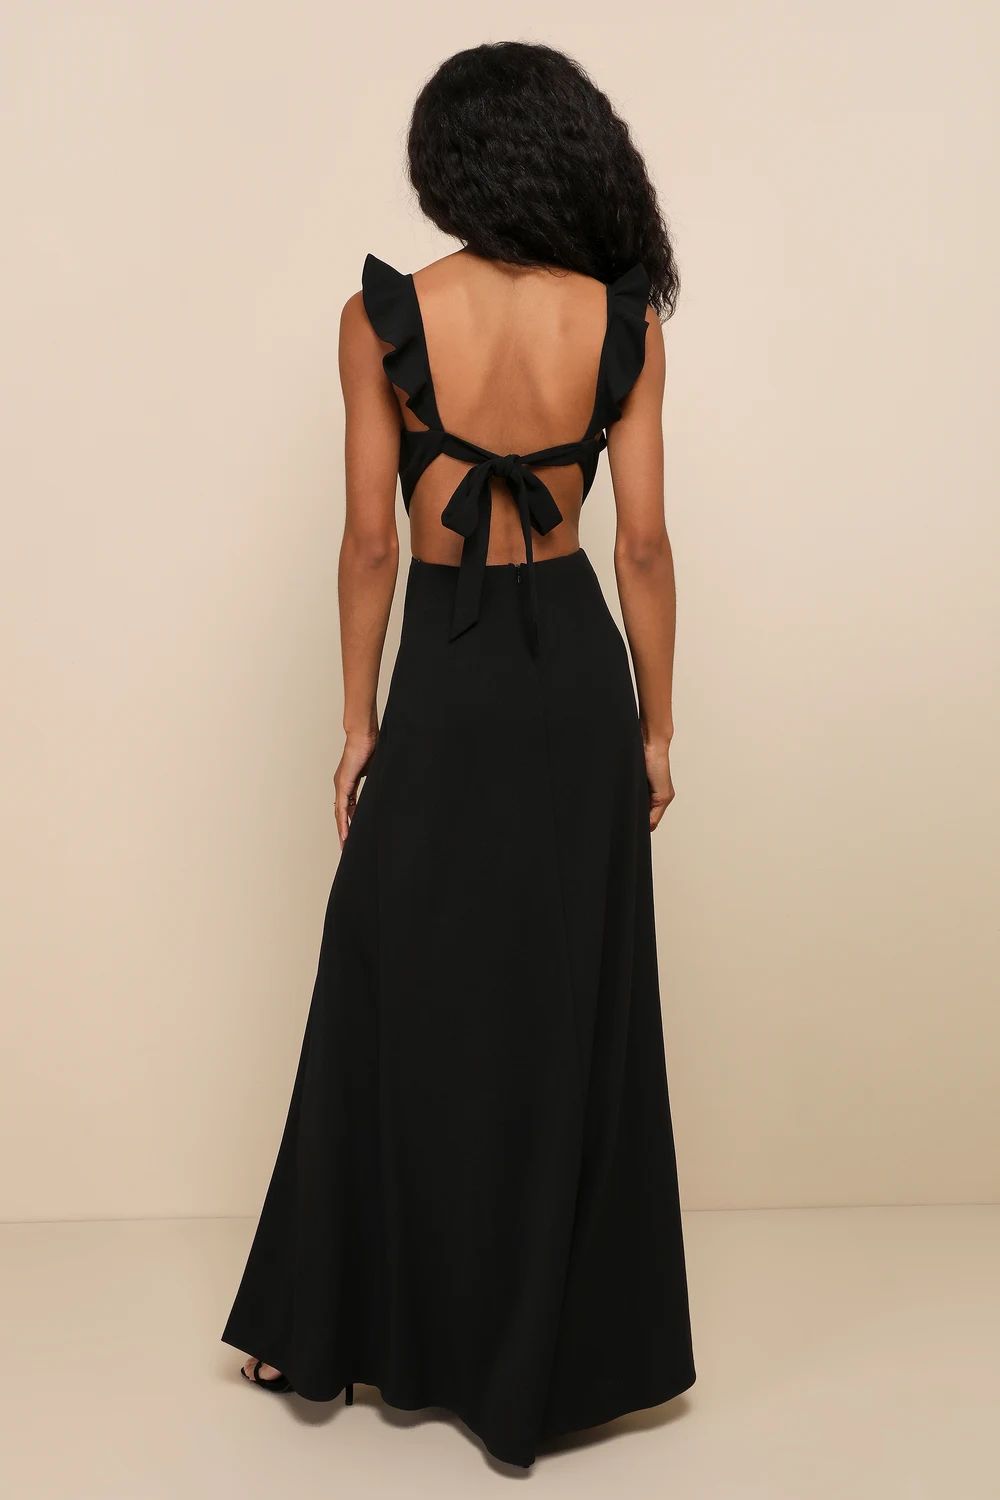 Captivating Charisma Black Ruffled Cutout Tie-Back Maxi Dress | Lulus